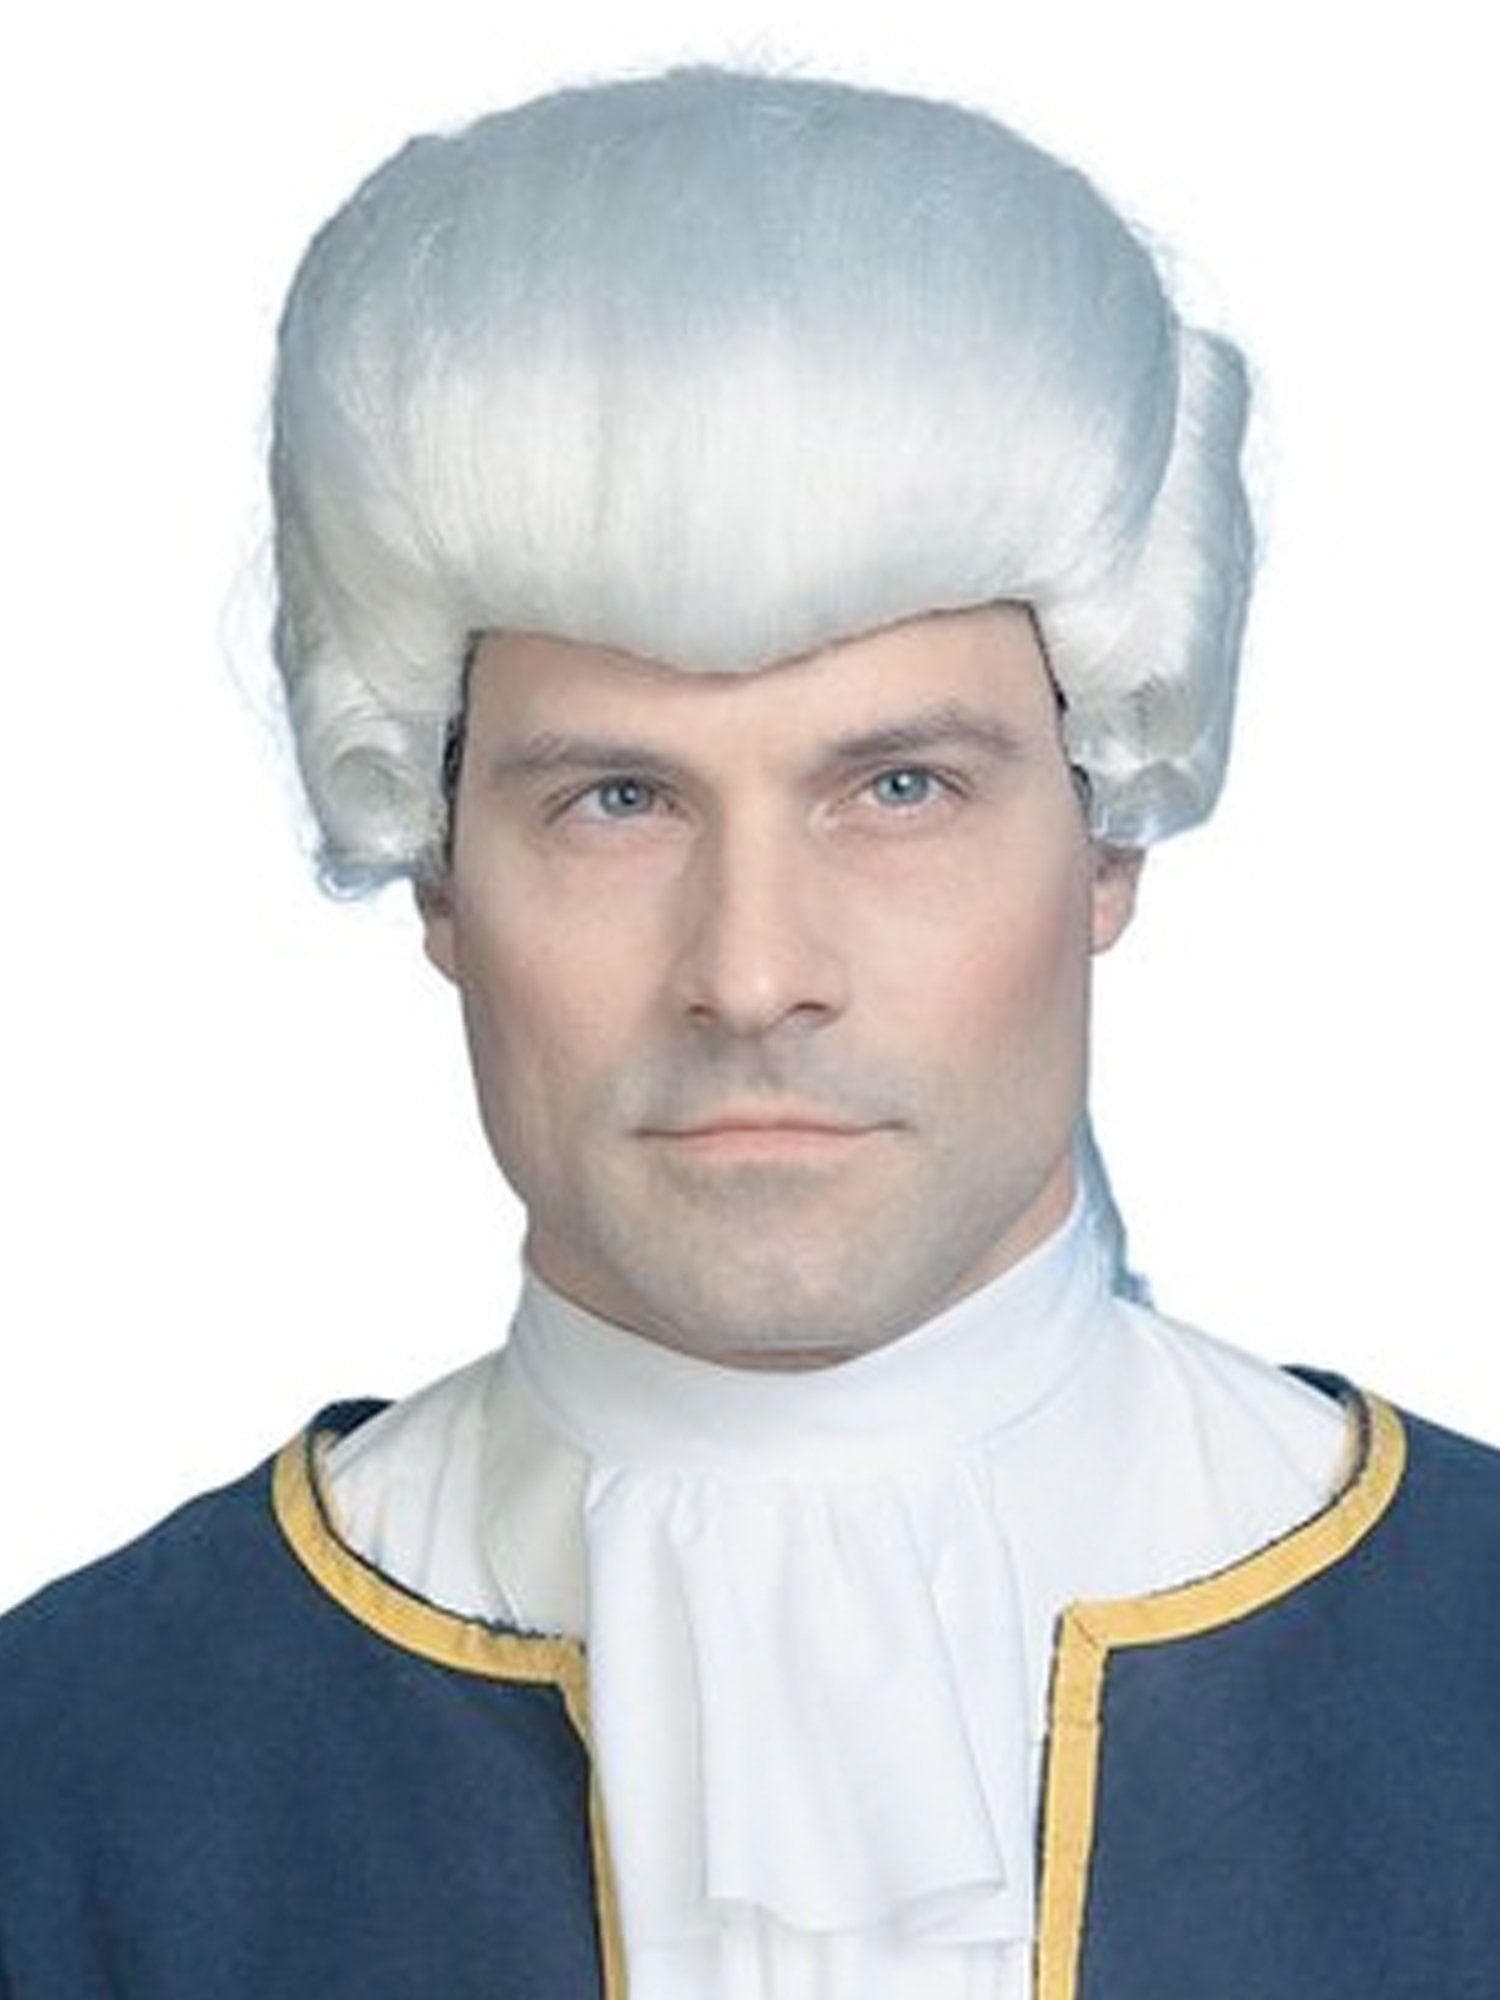 Men's White Colonial Wig - costumes.com